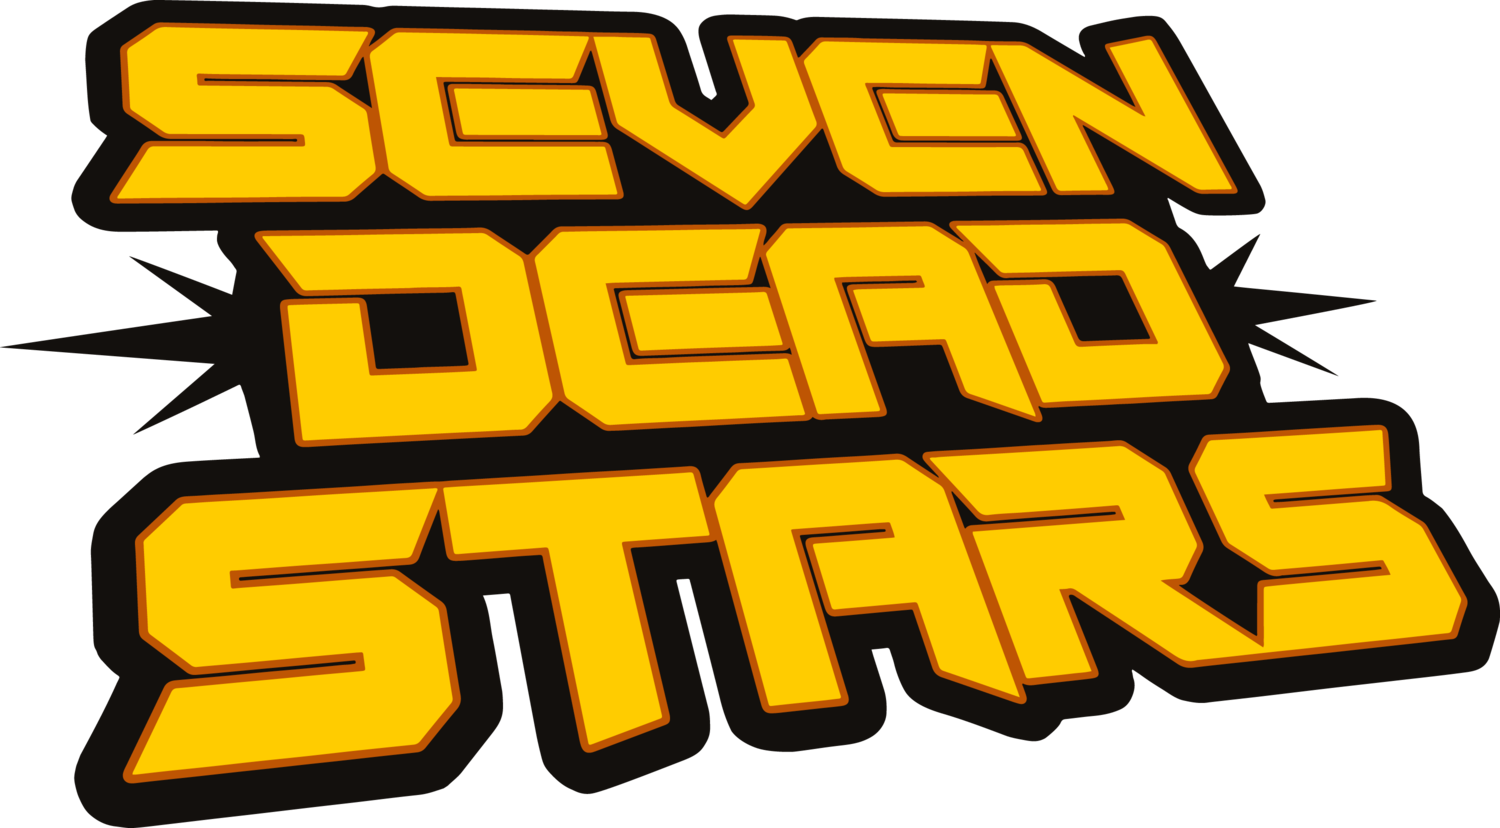 SEVEN DEAD STARS